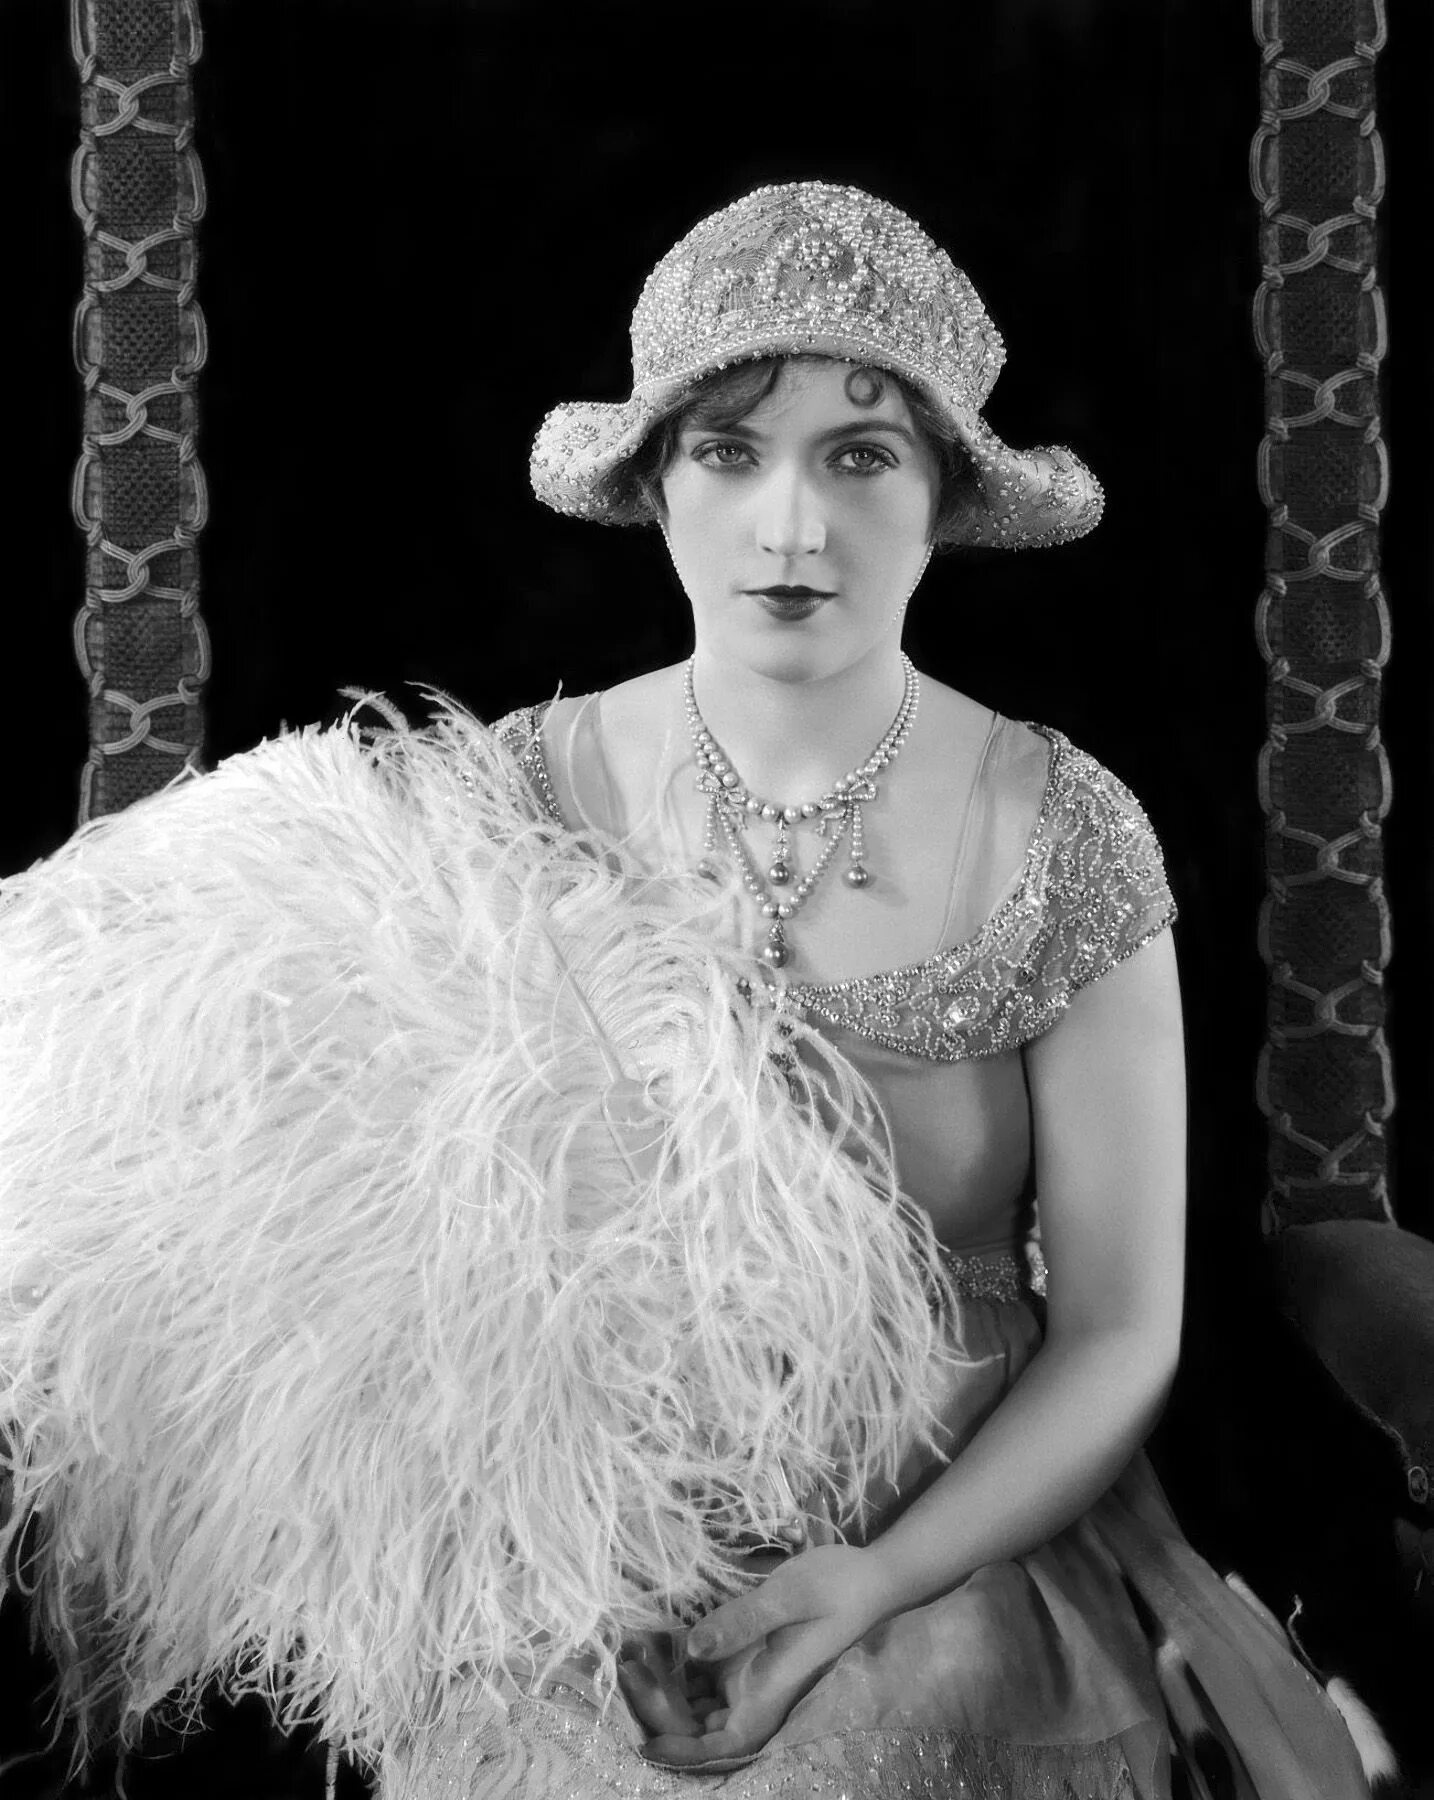 Мода 1920-х годов. Марион Дэвис в 1920е. Мода 20х годов 20 века. Девушки из варьете Ziegfeld Follies.